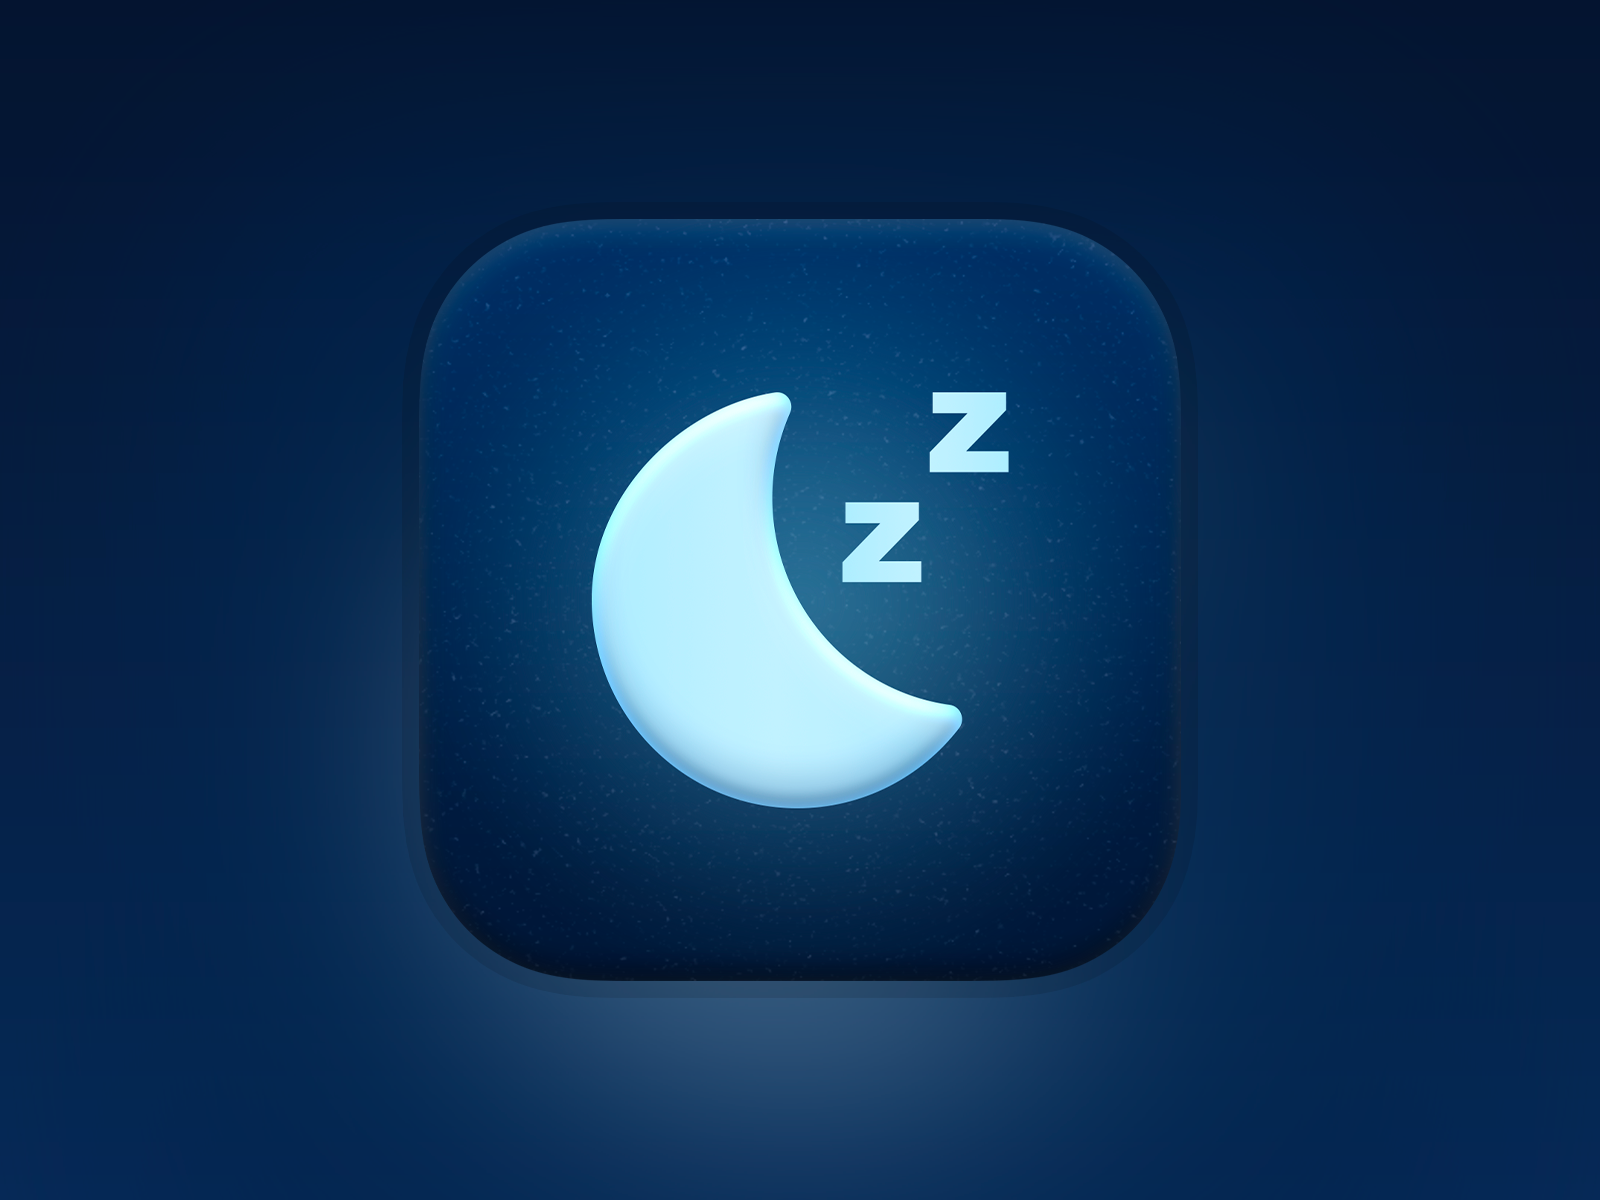 App icons design idea #29: Sleep & relaxation app icon